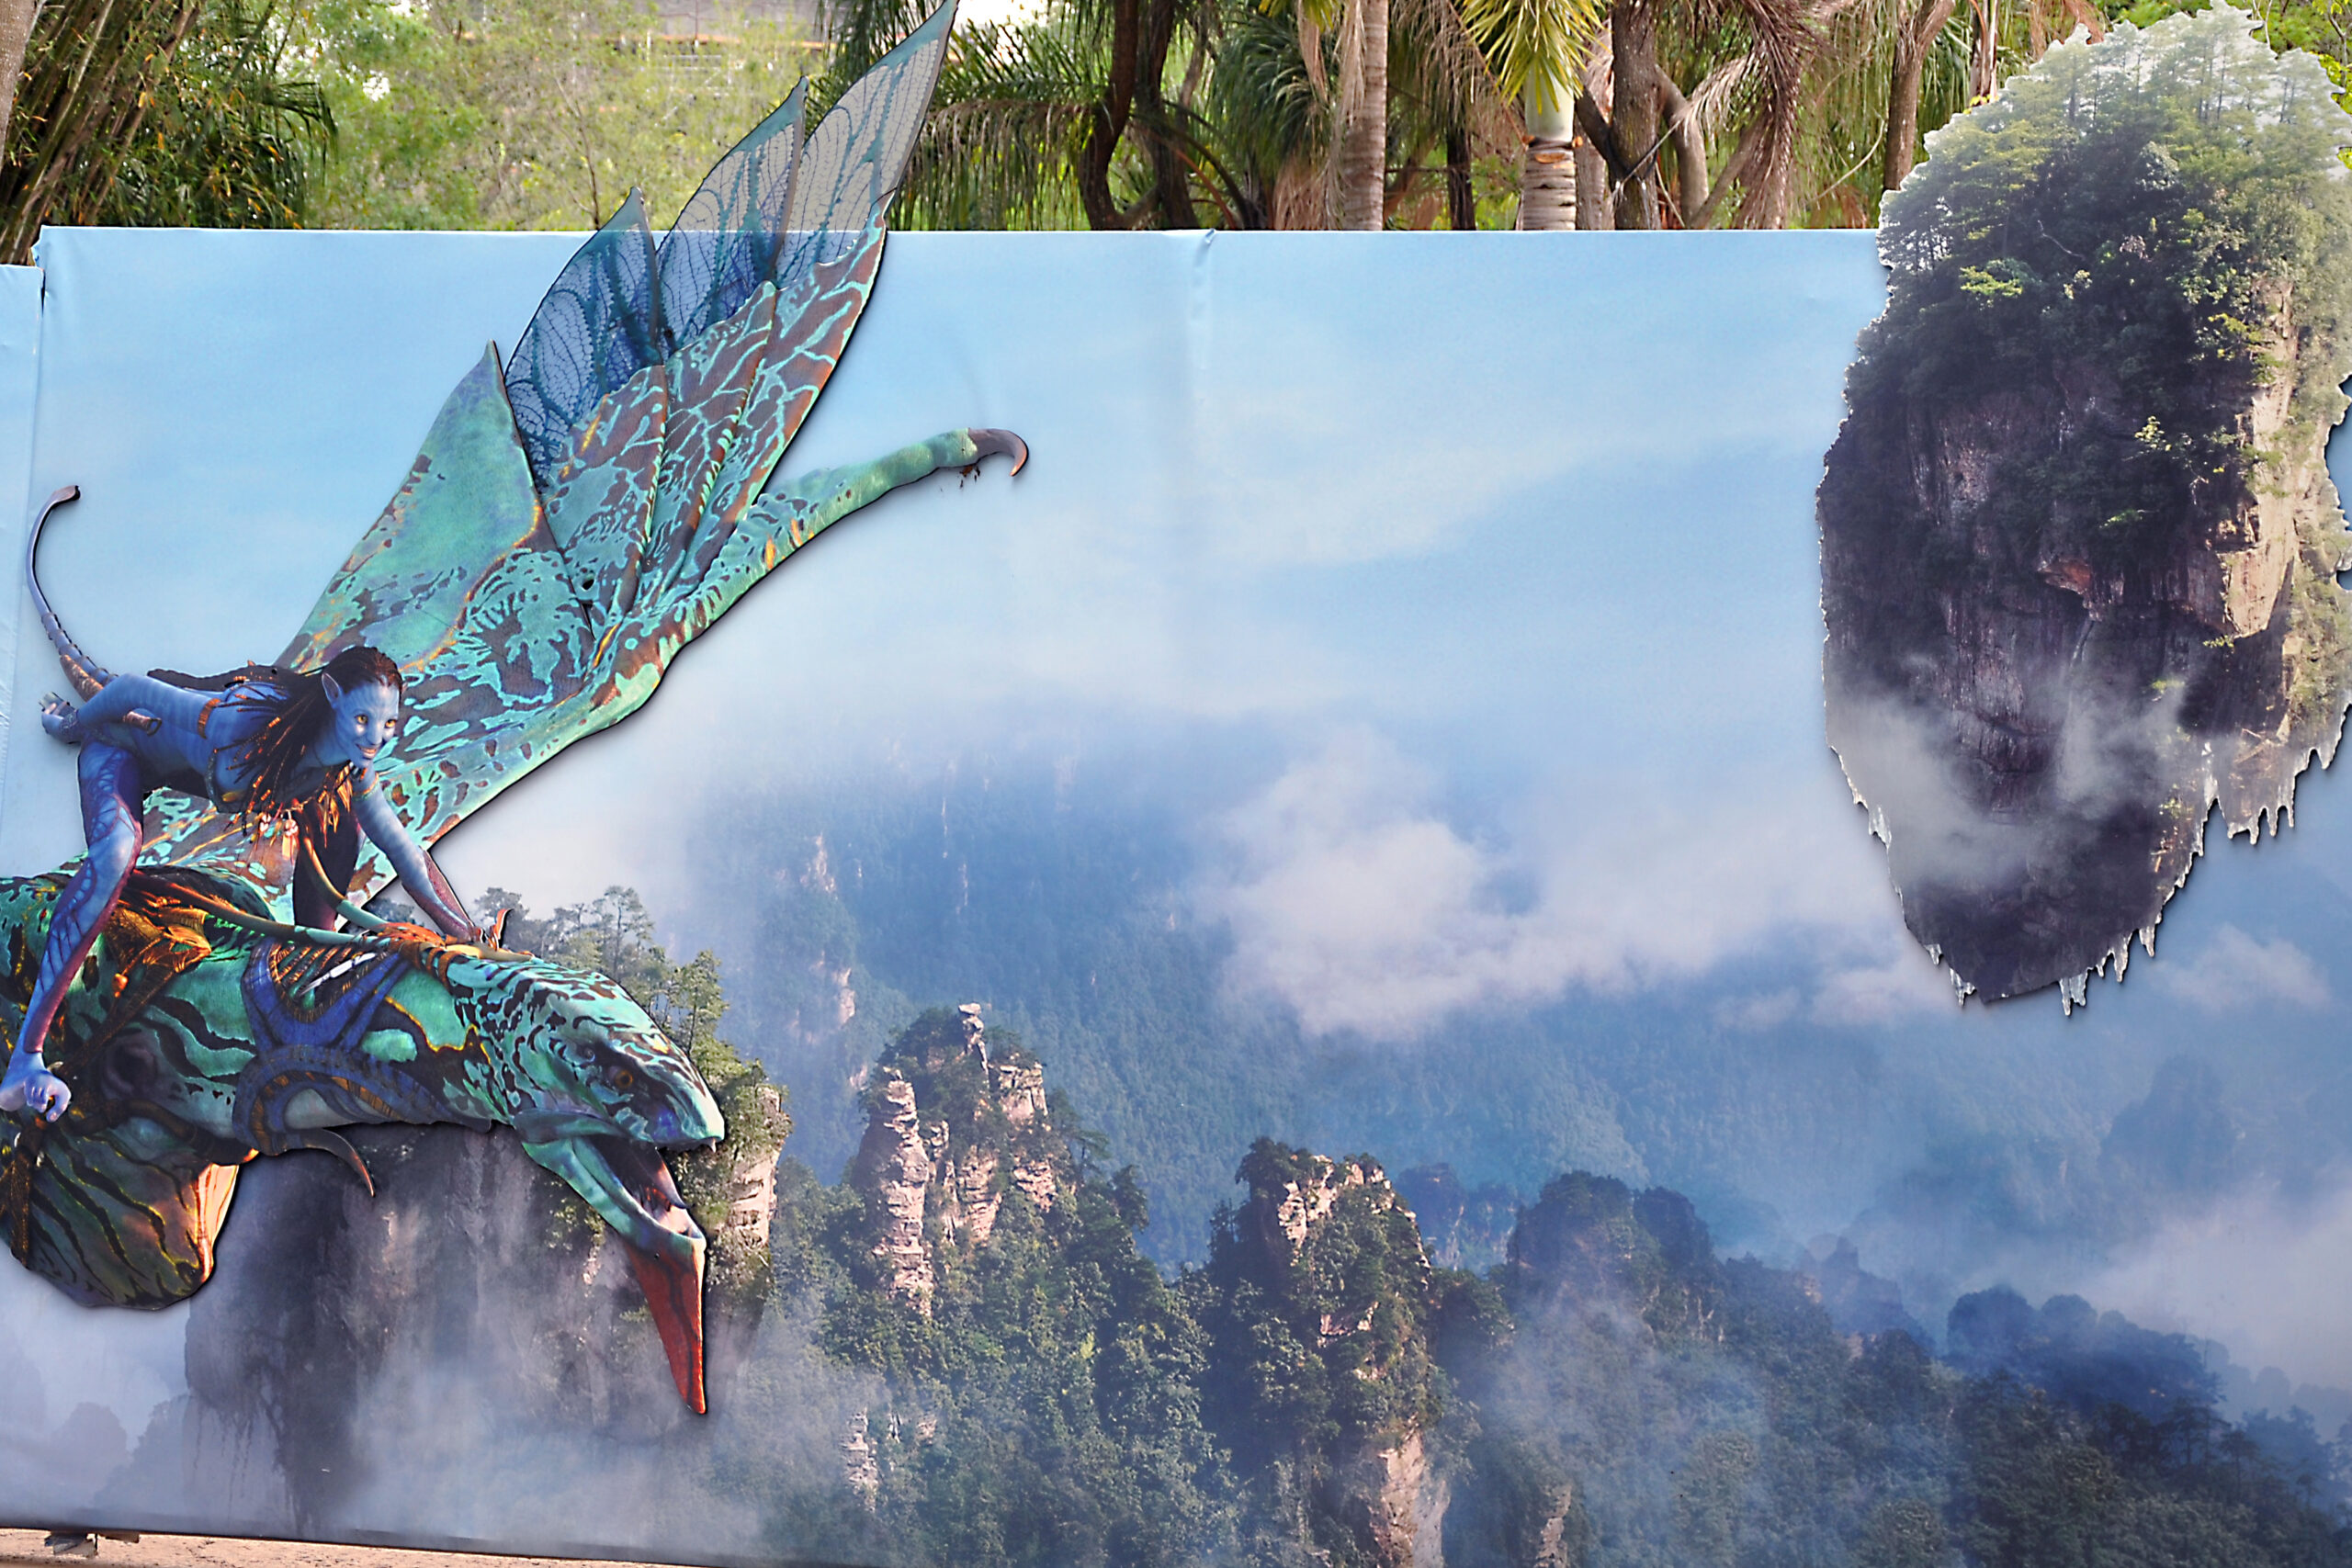 Pandora World of Avatar at Animal Kingdom